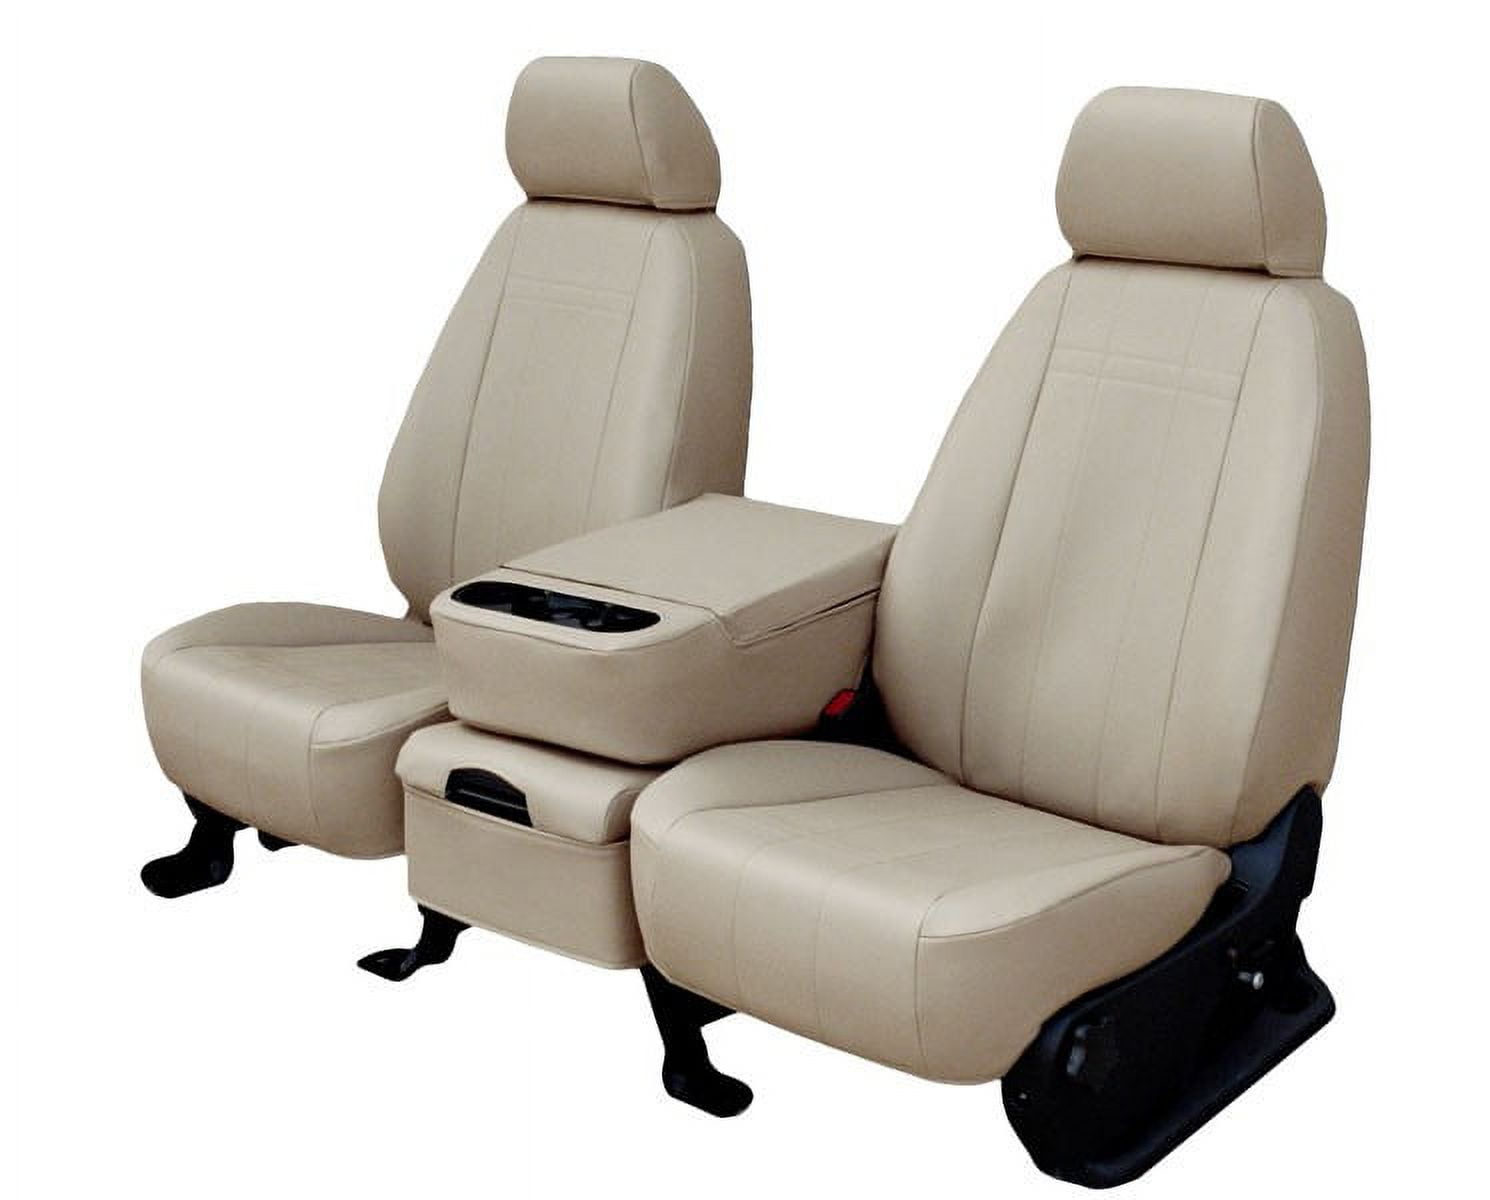 Toyota Supra -Semi-Tailored Seat Covers Car Seat Covers